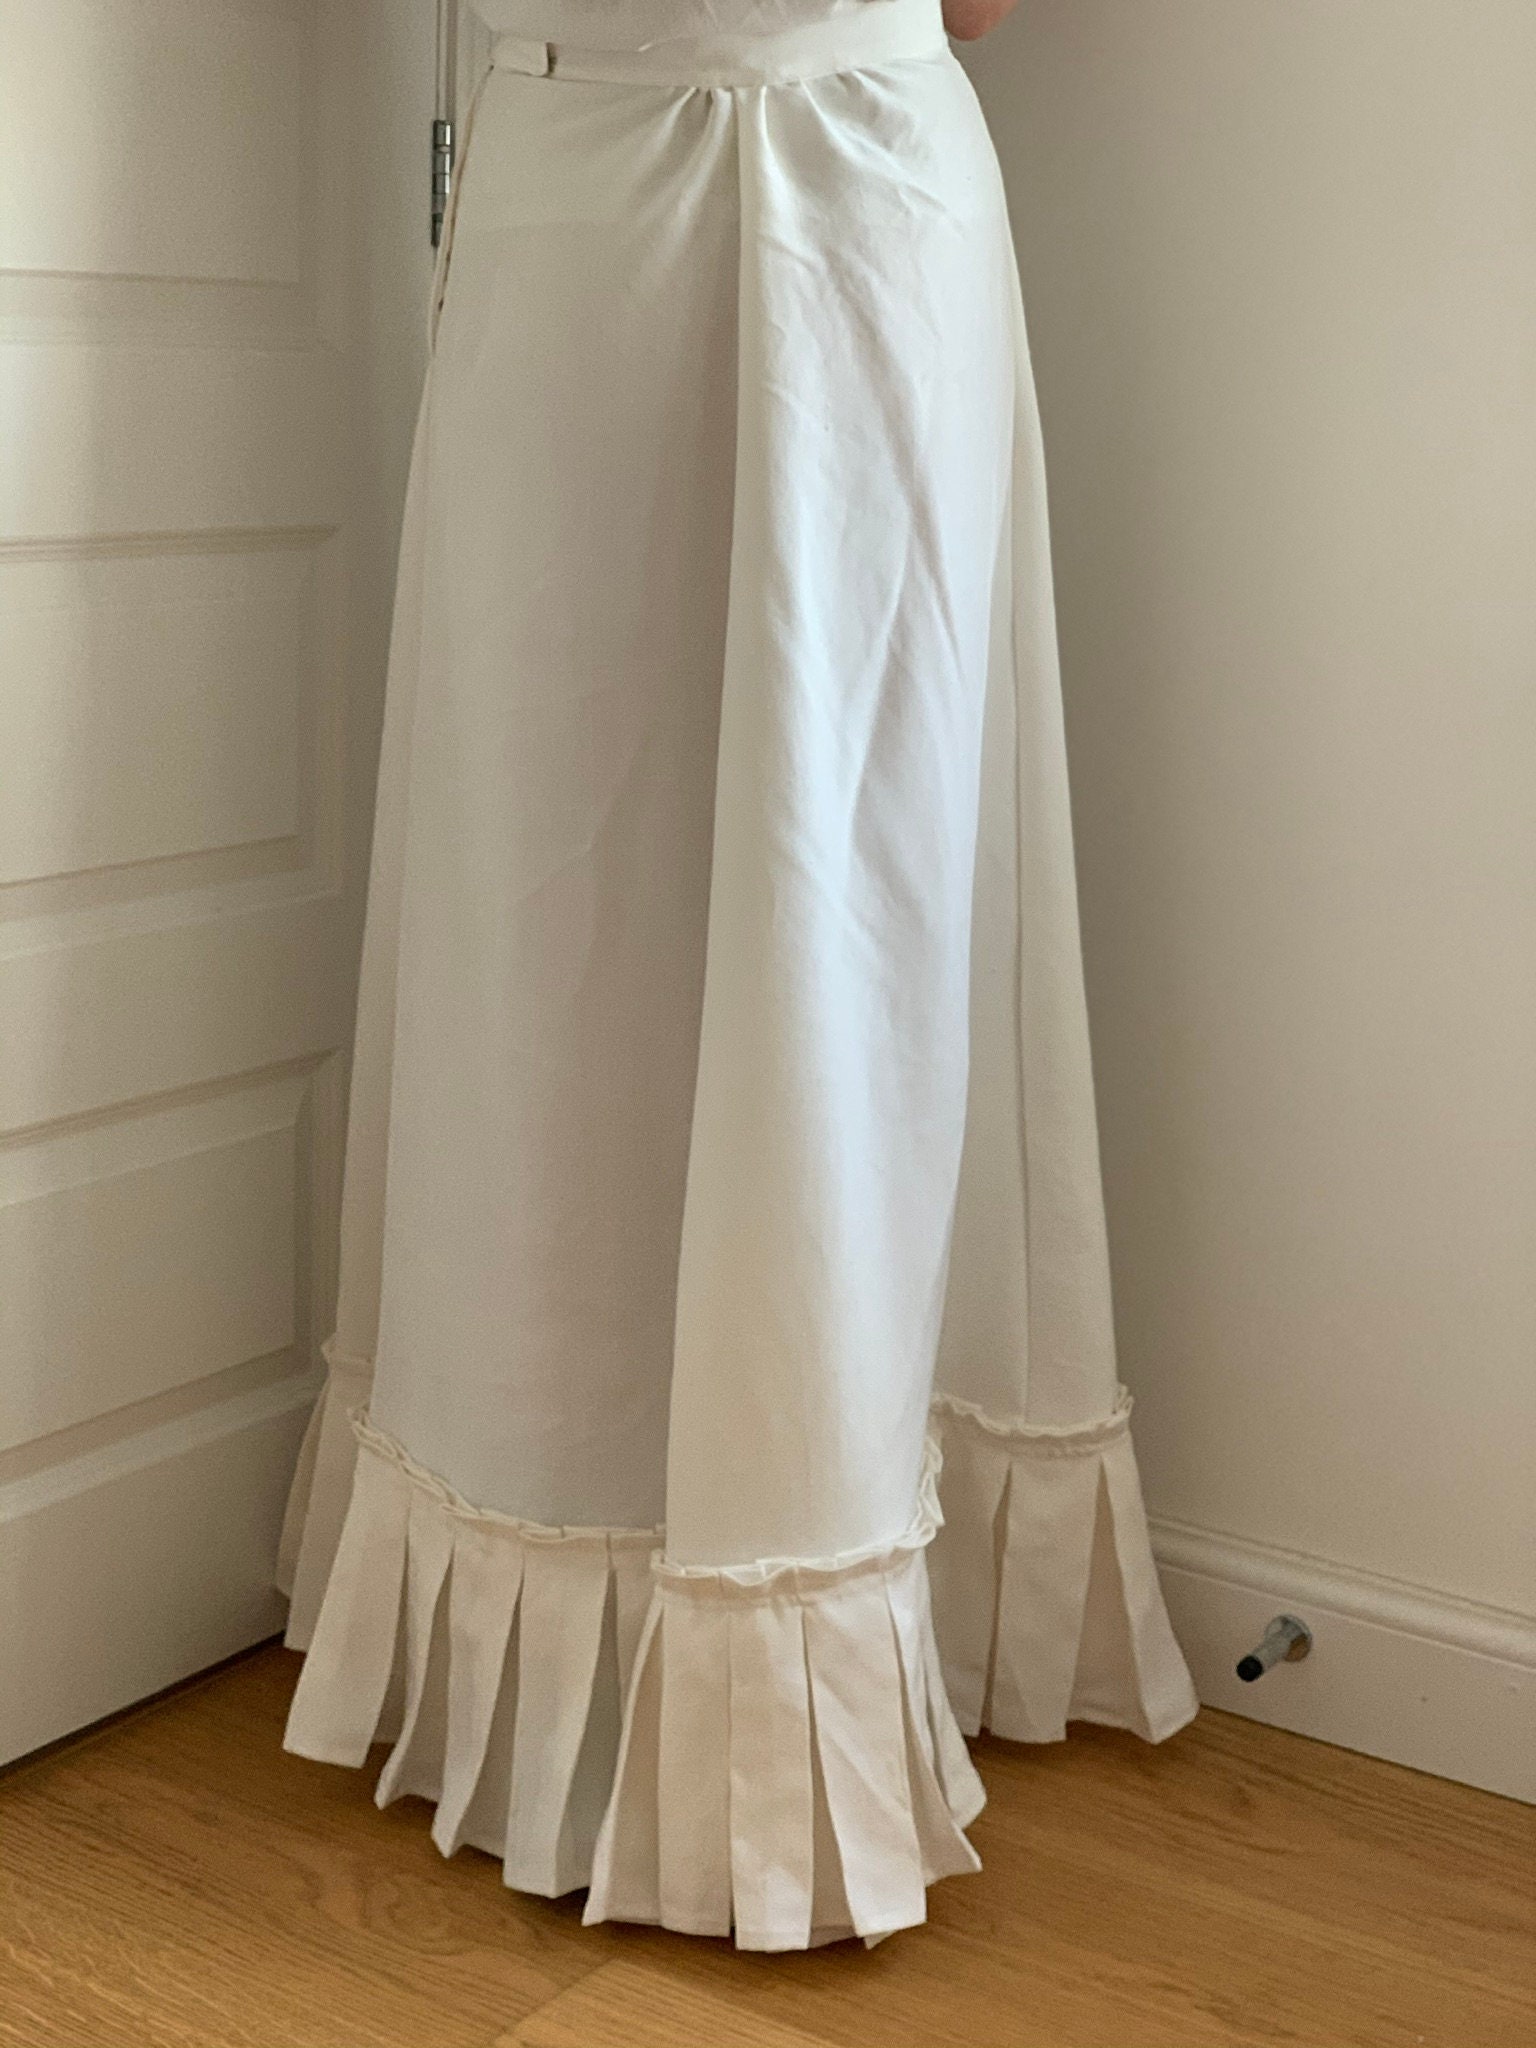 Petticoat/underskirt Late Victorian Style Ladies Maxi Full | Etsy